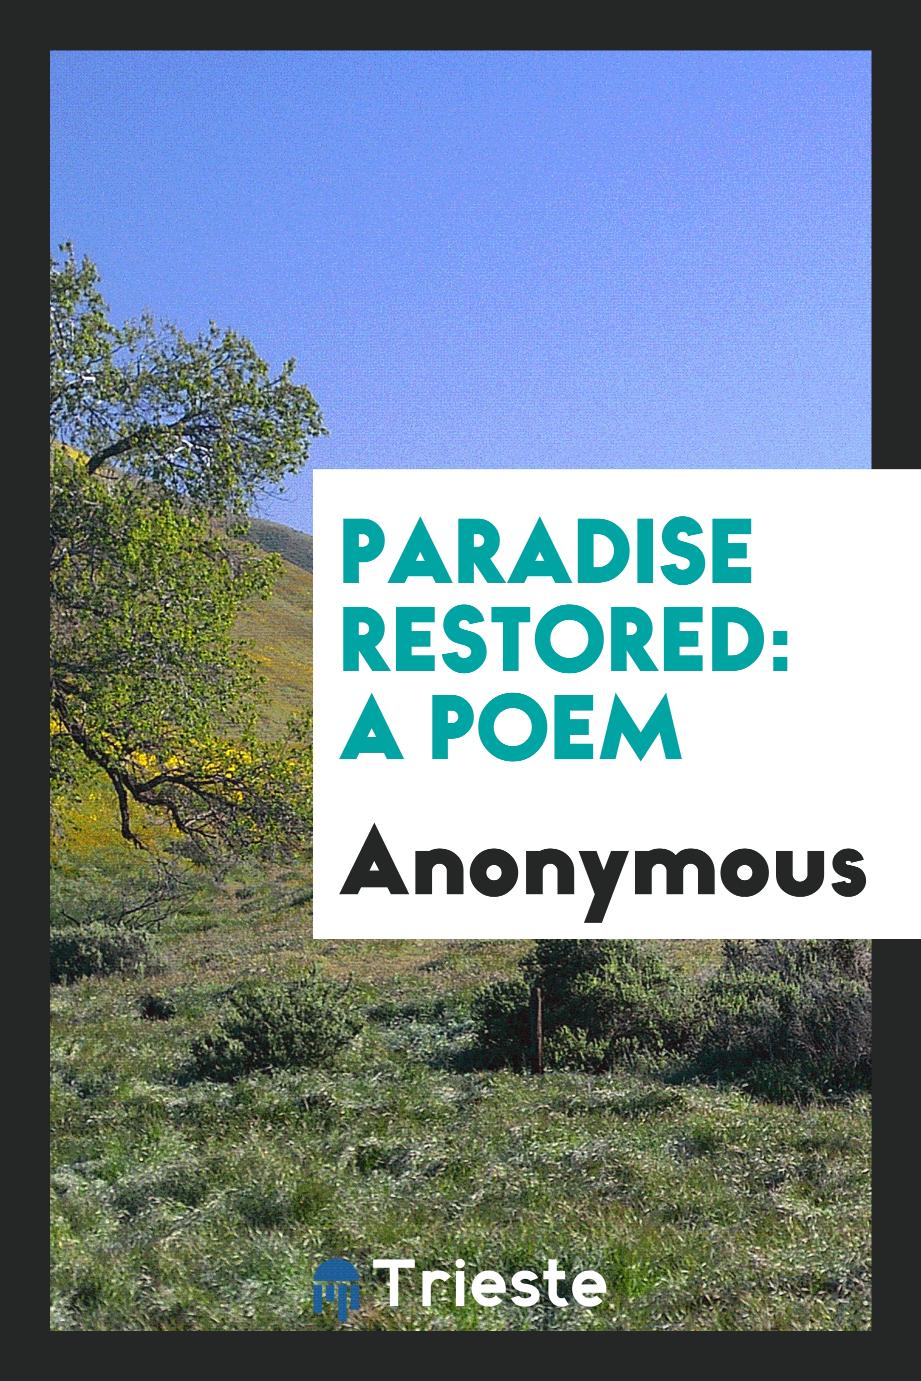 Paradise restored: a poem